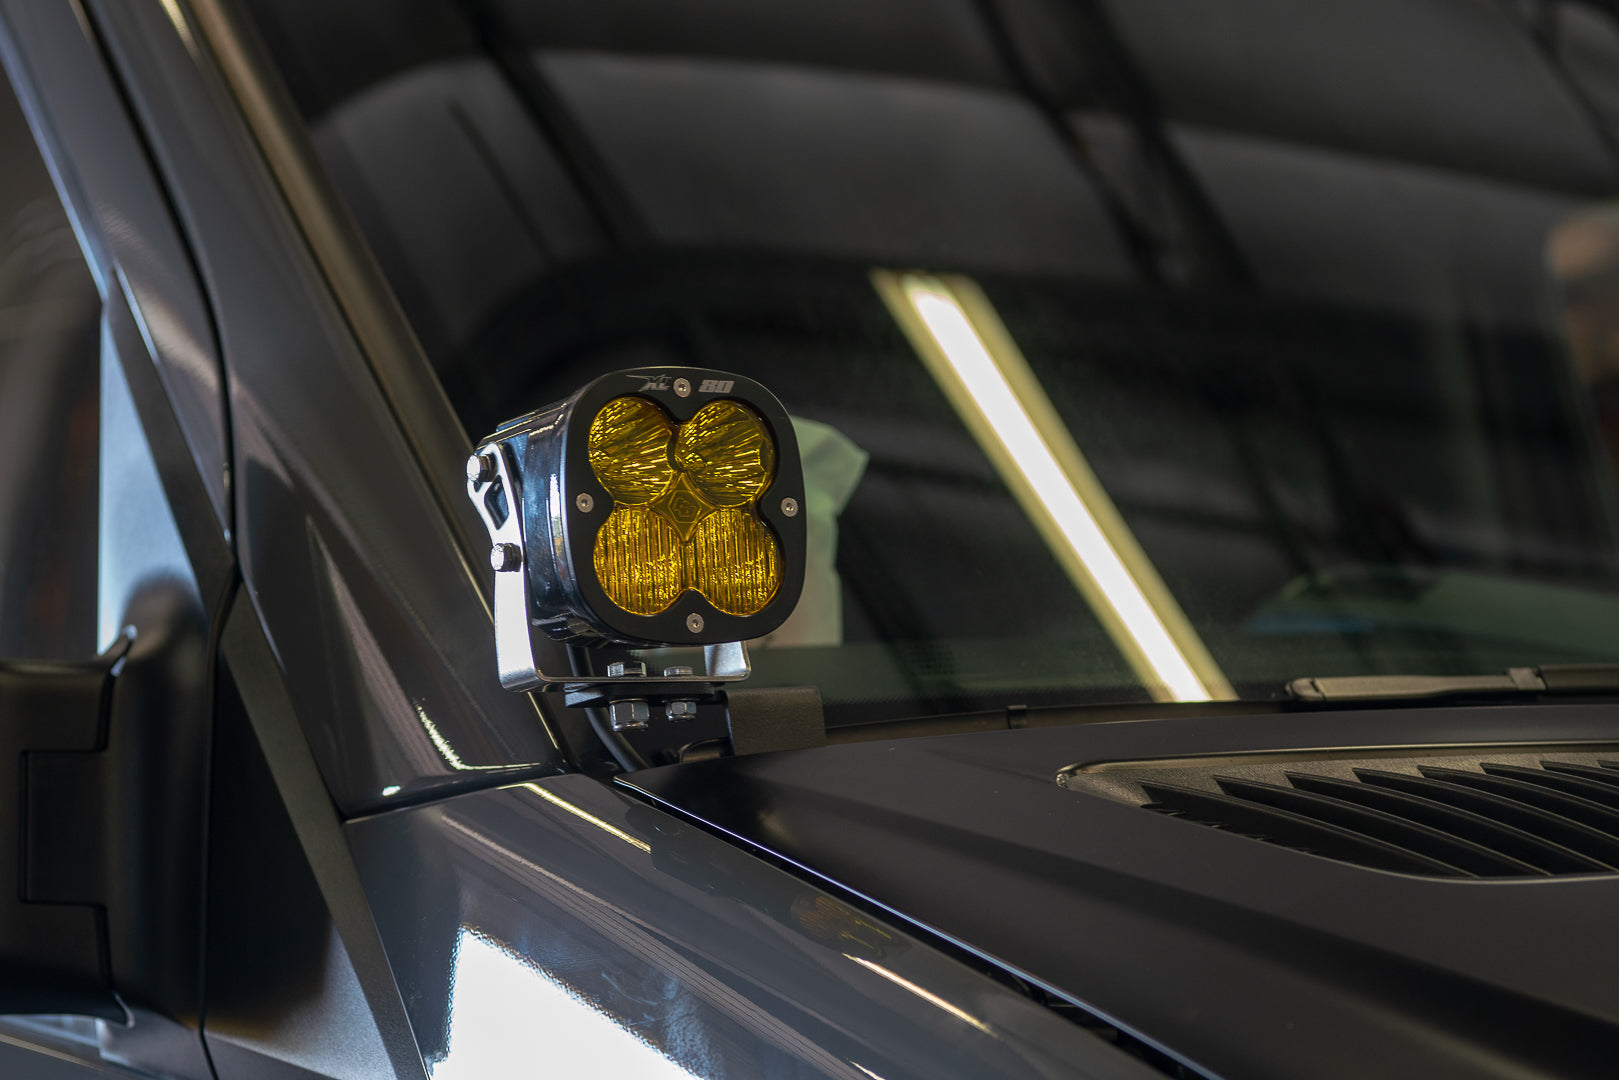 '07-18 Mercedes Sprinter Van SDHQ Built A-Pillar Light Mounts display